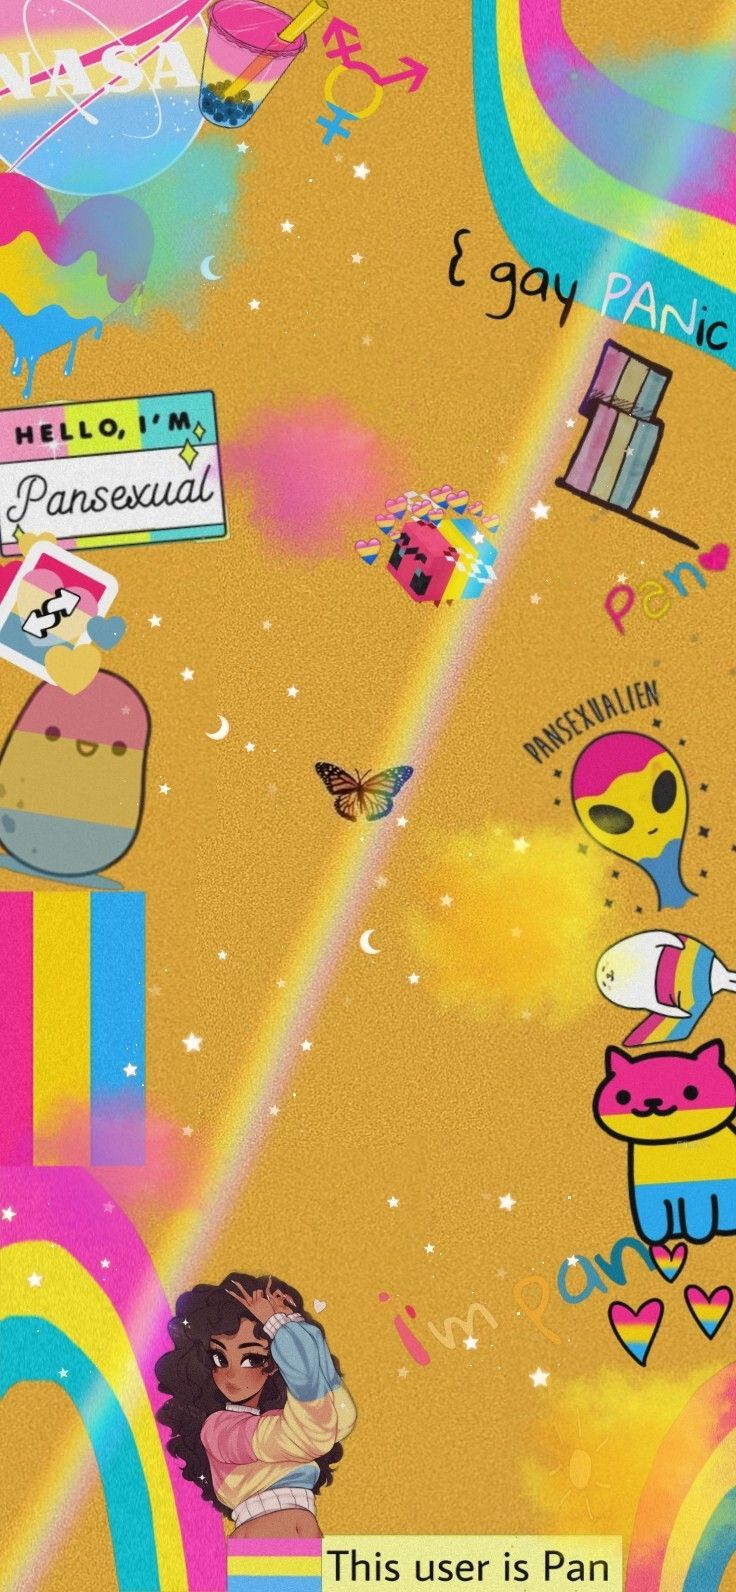 Pansexual pride